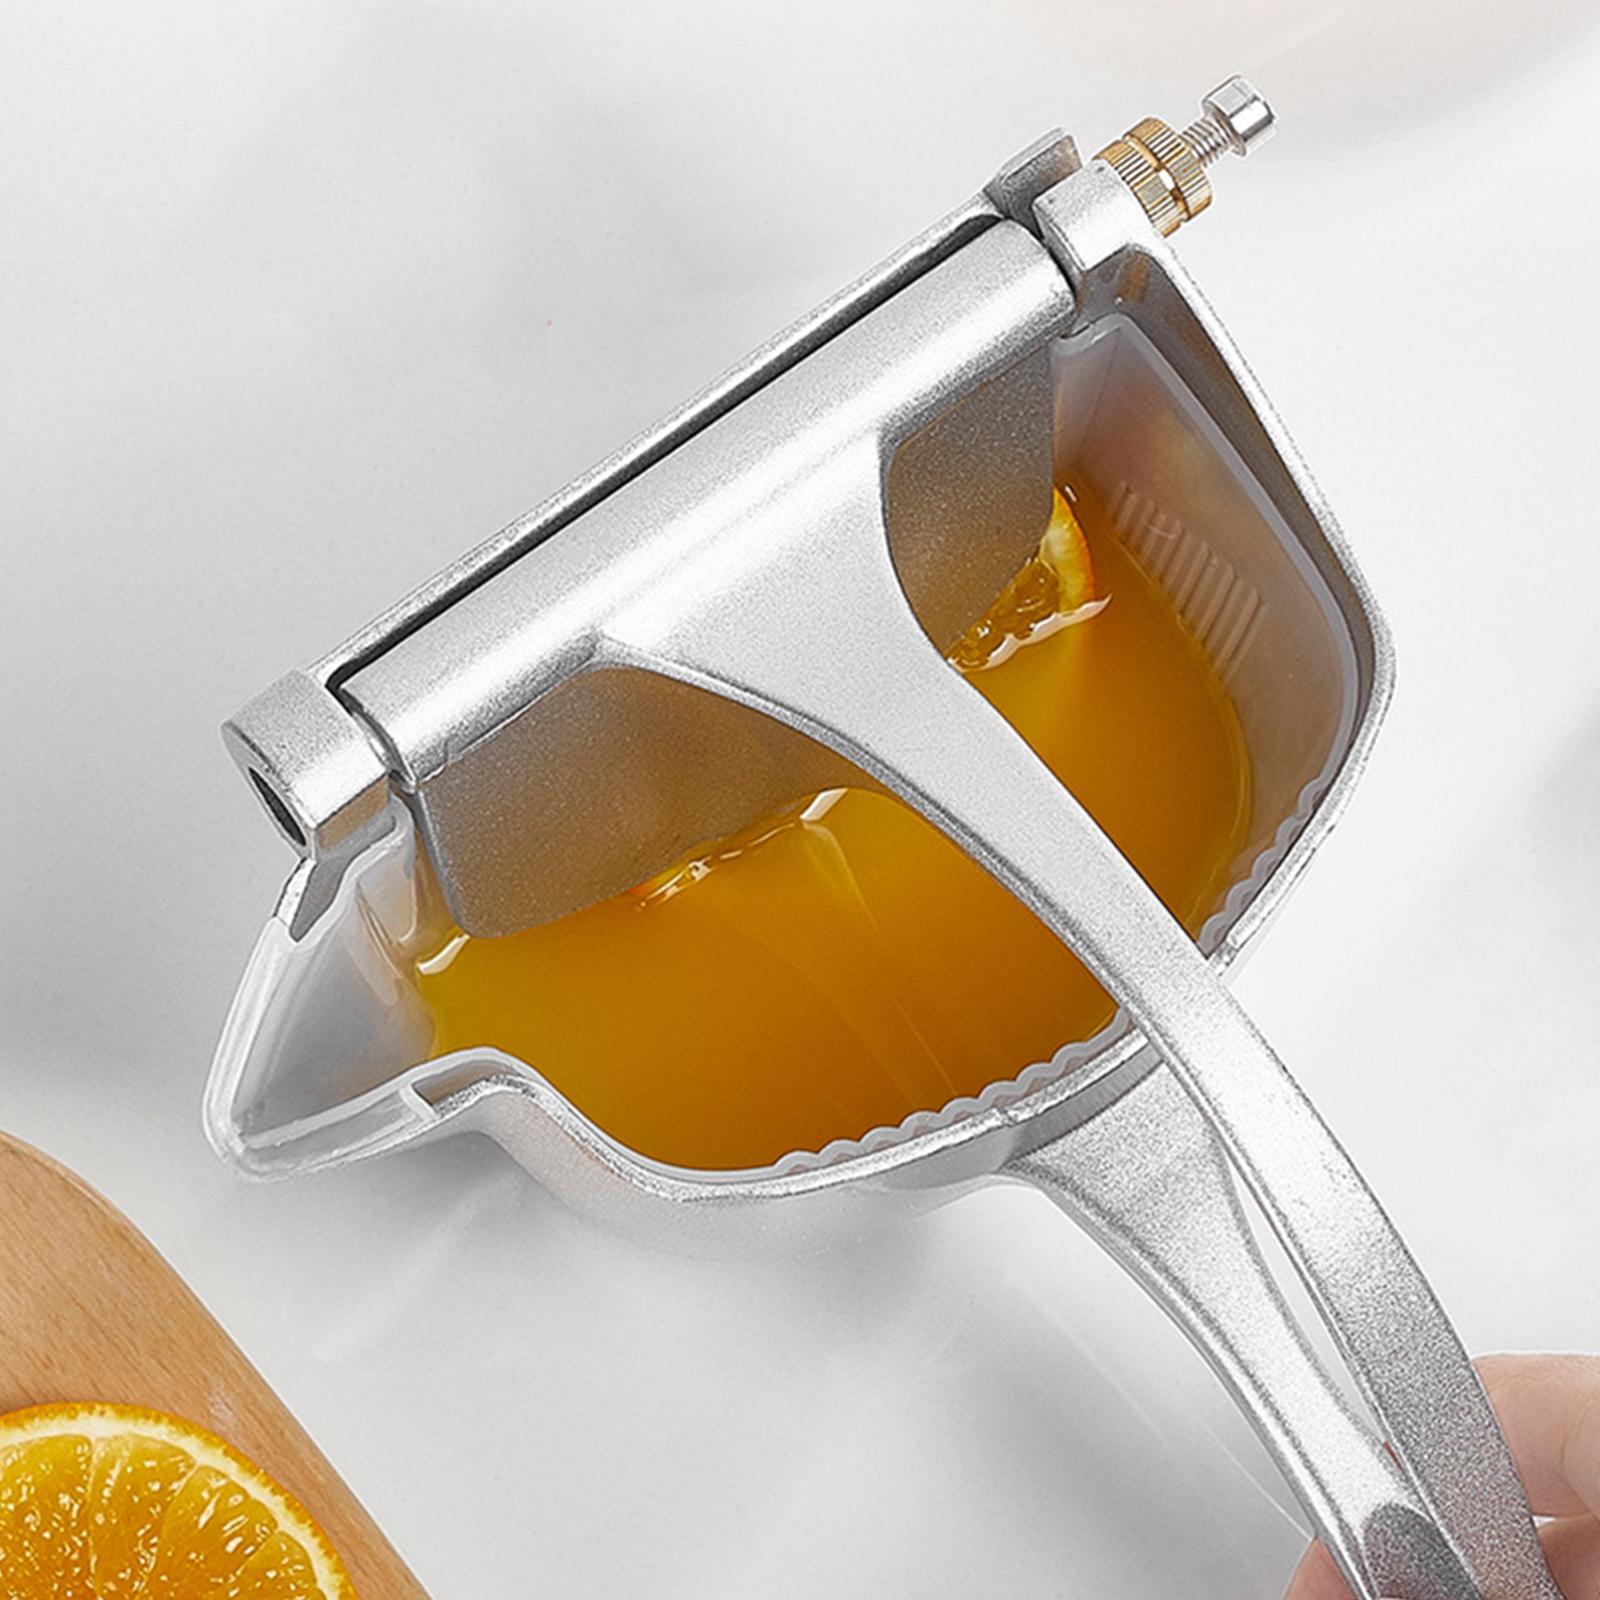 Lemon Squeezer Metal Squeezer Bowl Lime Squeezer Manual Citrus Press Juicer for Orange Citrus Fruit Juicer